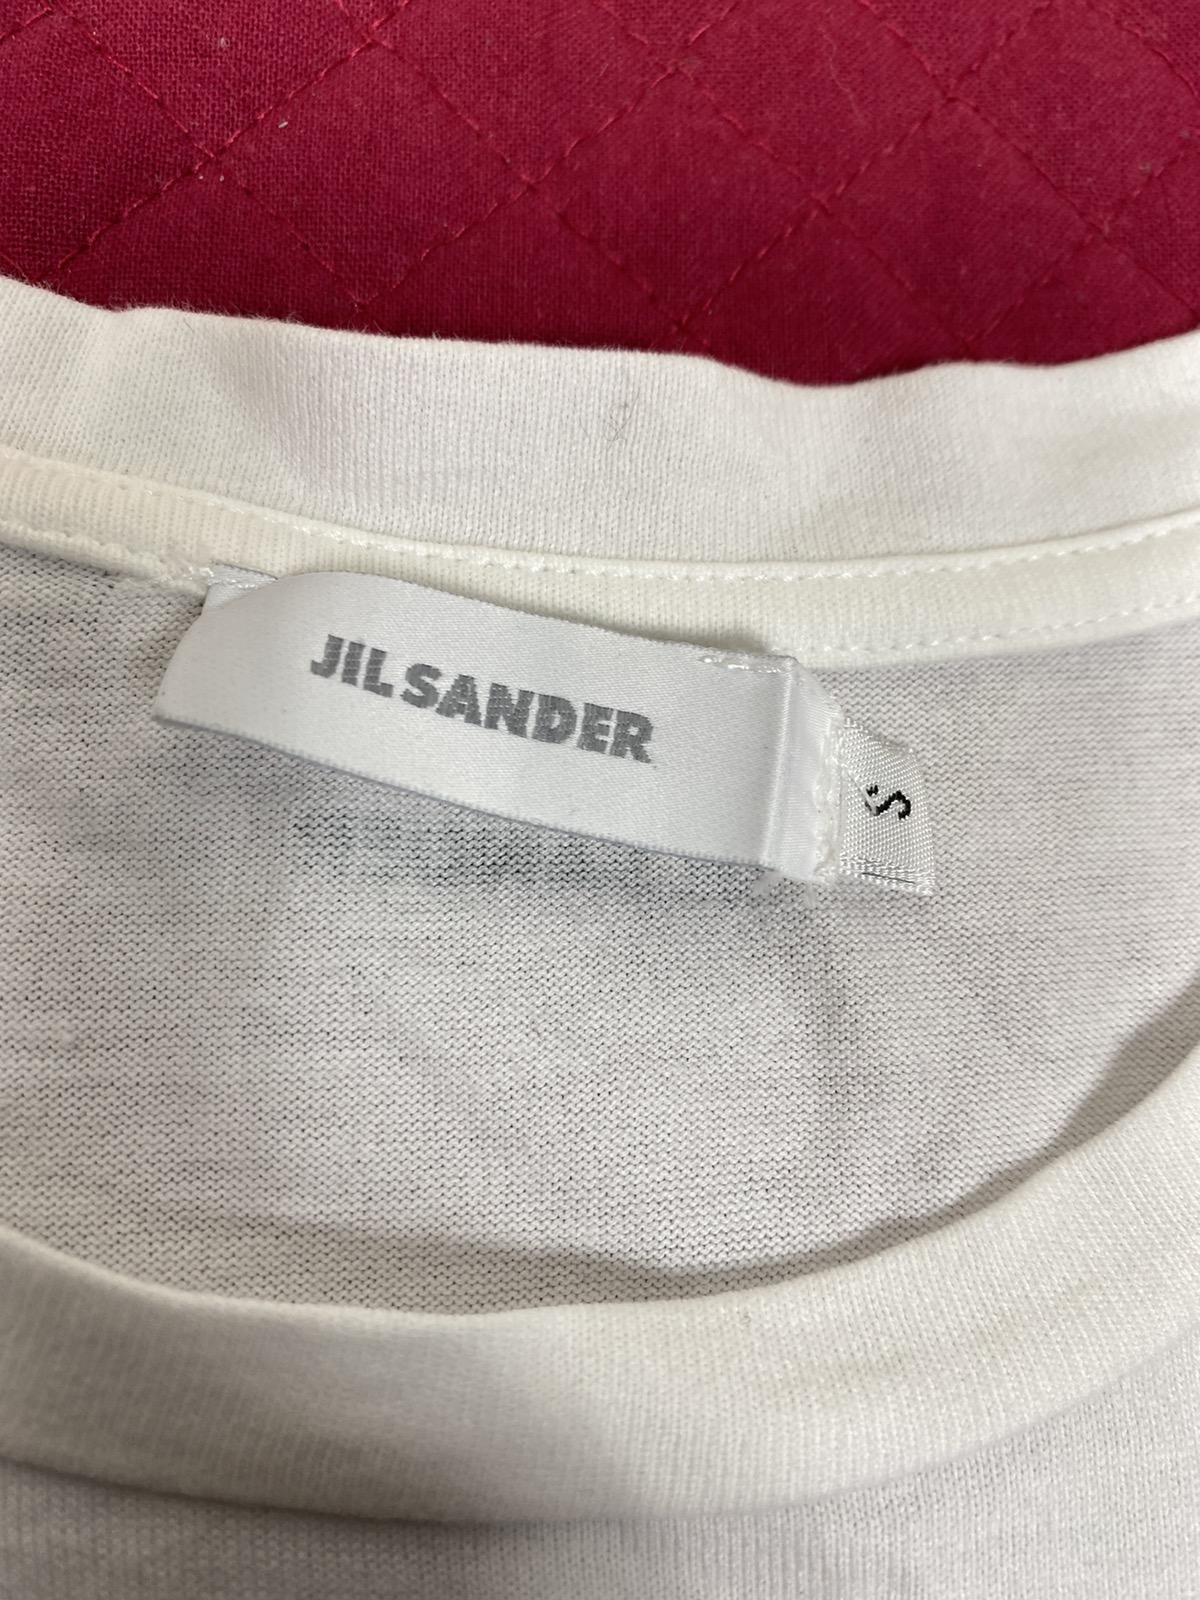 Jil Sander Terry cloth long sleeve tshirt - 3